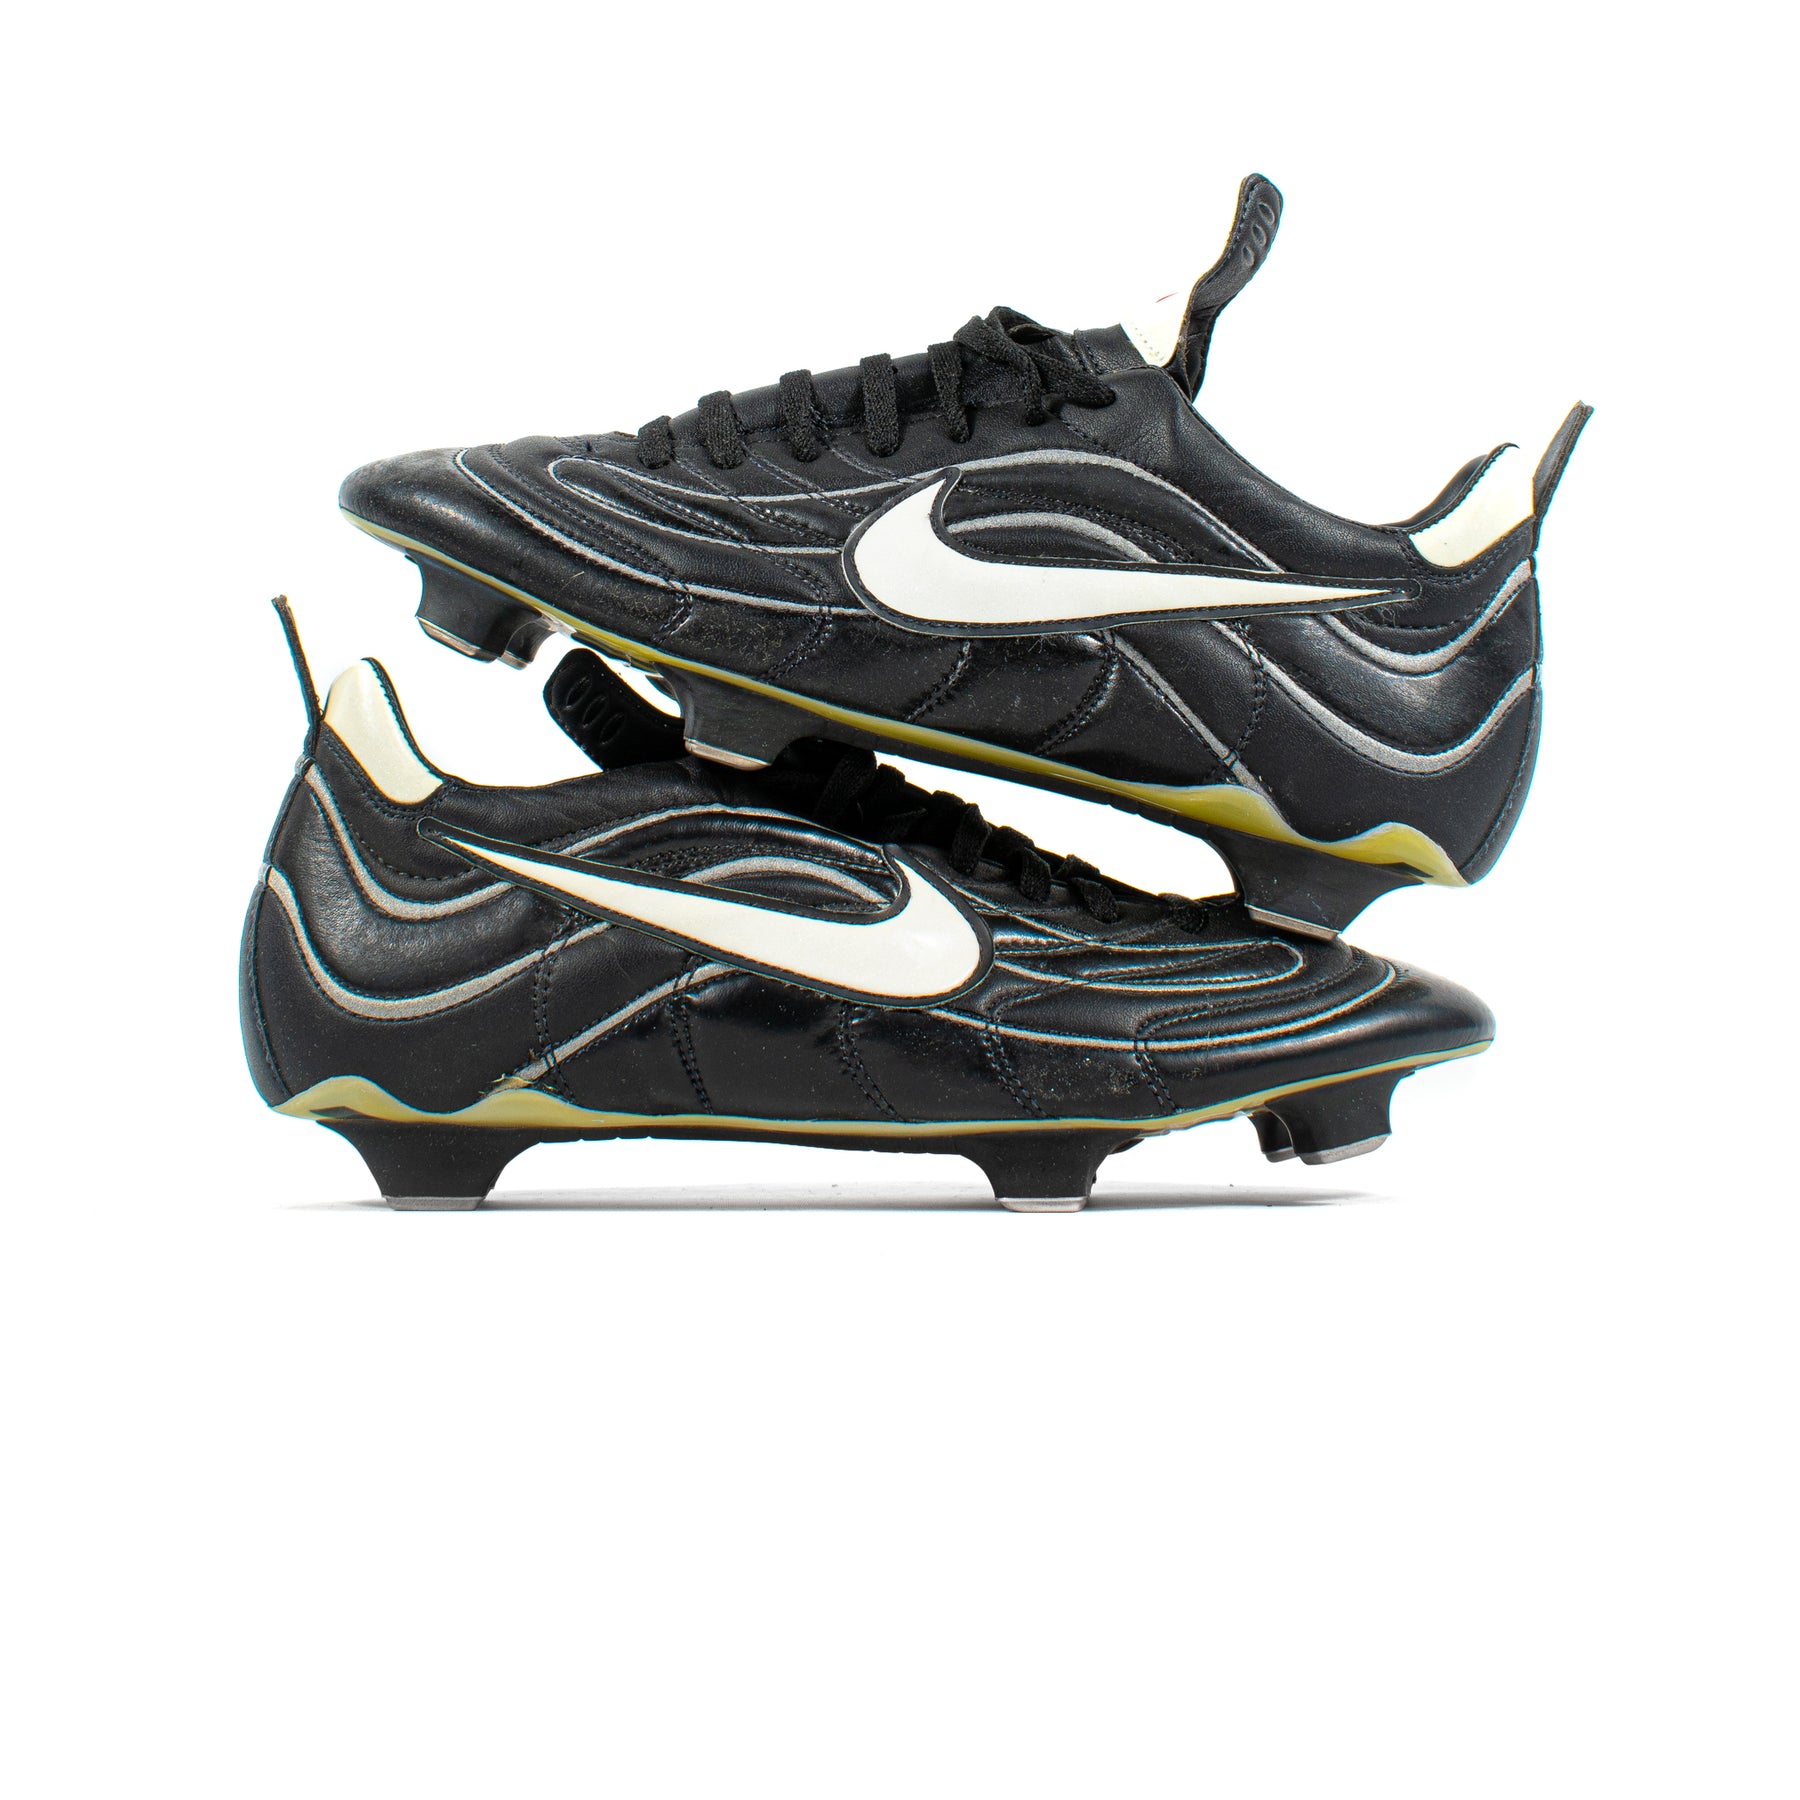 Nike Mercurial R9 1998 Black White SG – Soccer Cleats